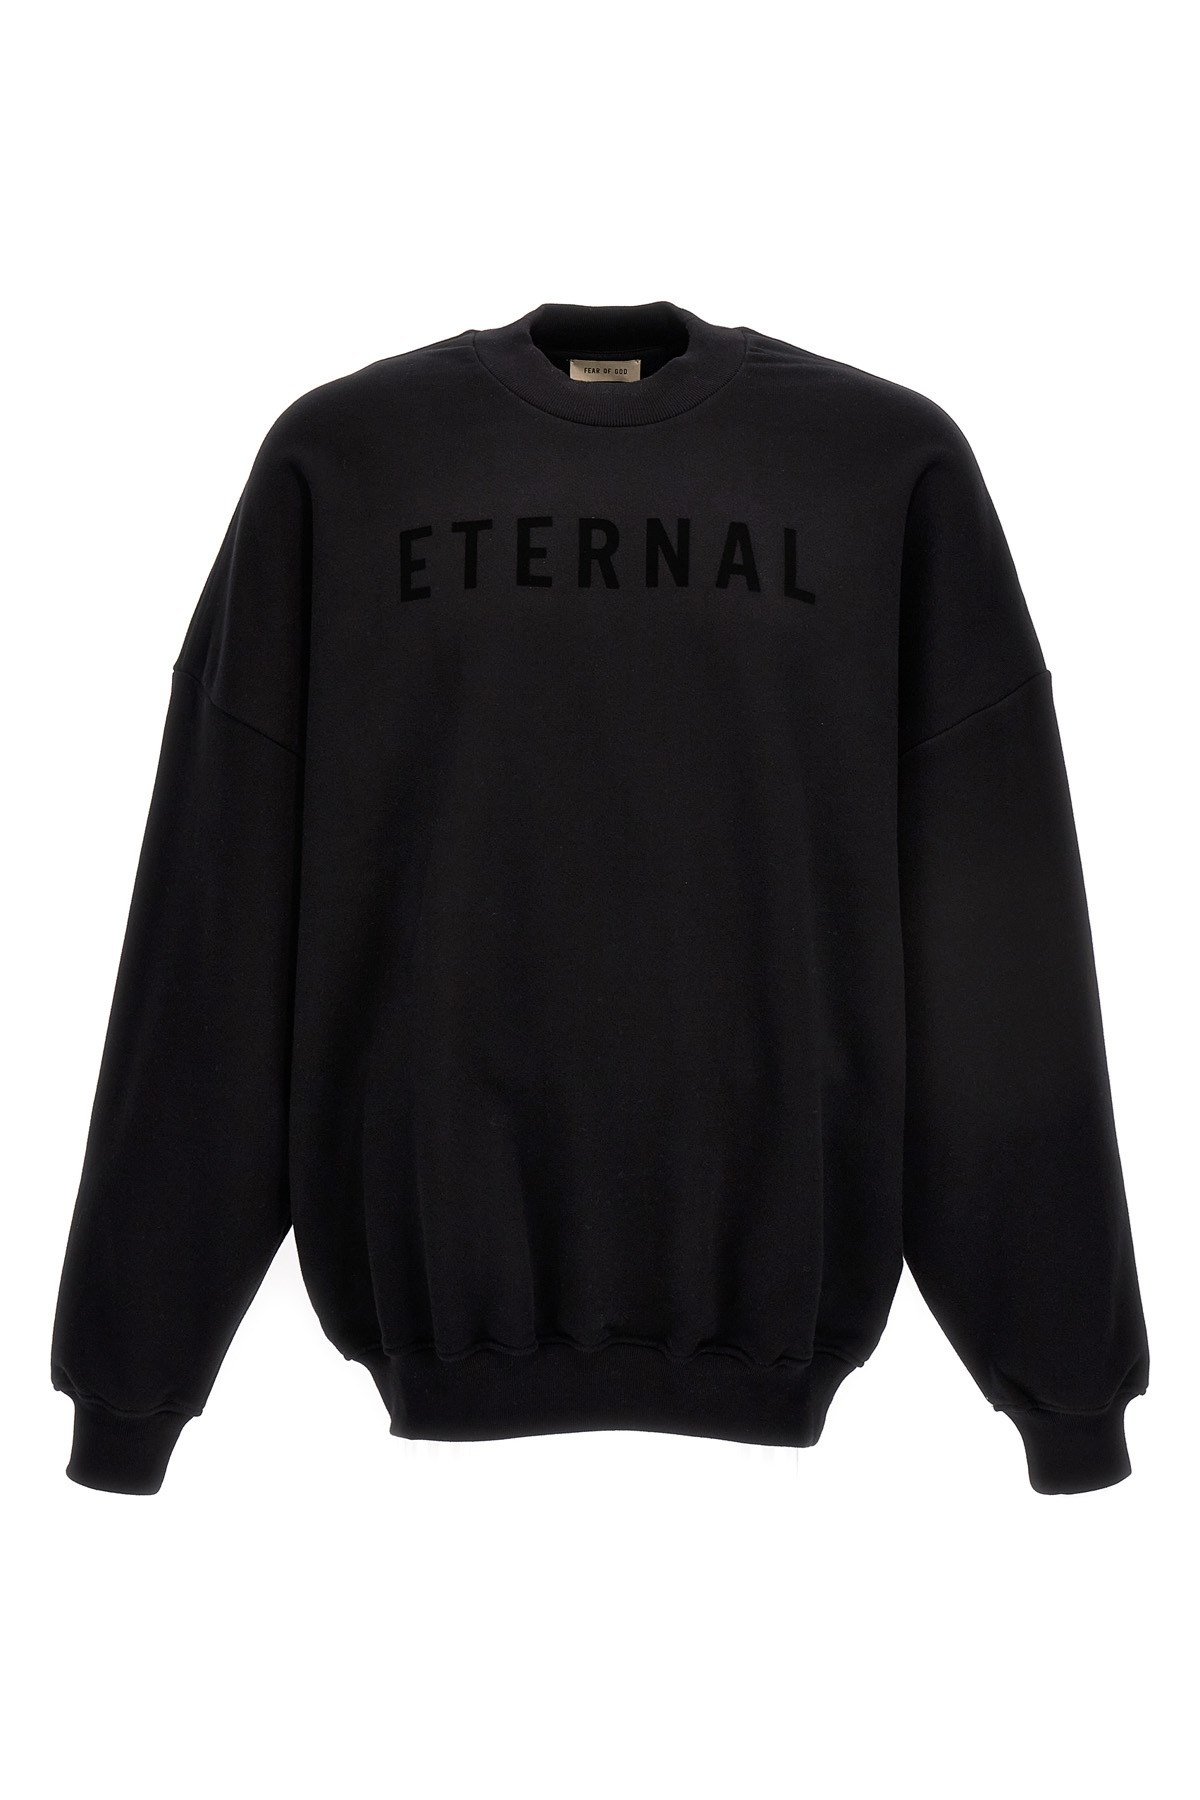 'Eternal' sweatshirt - 1